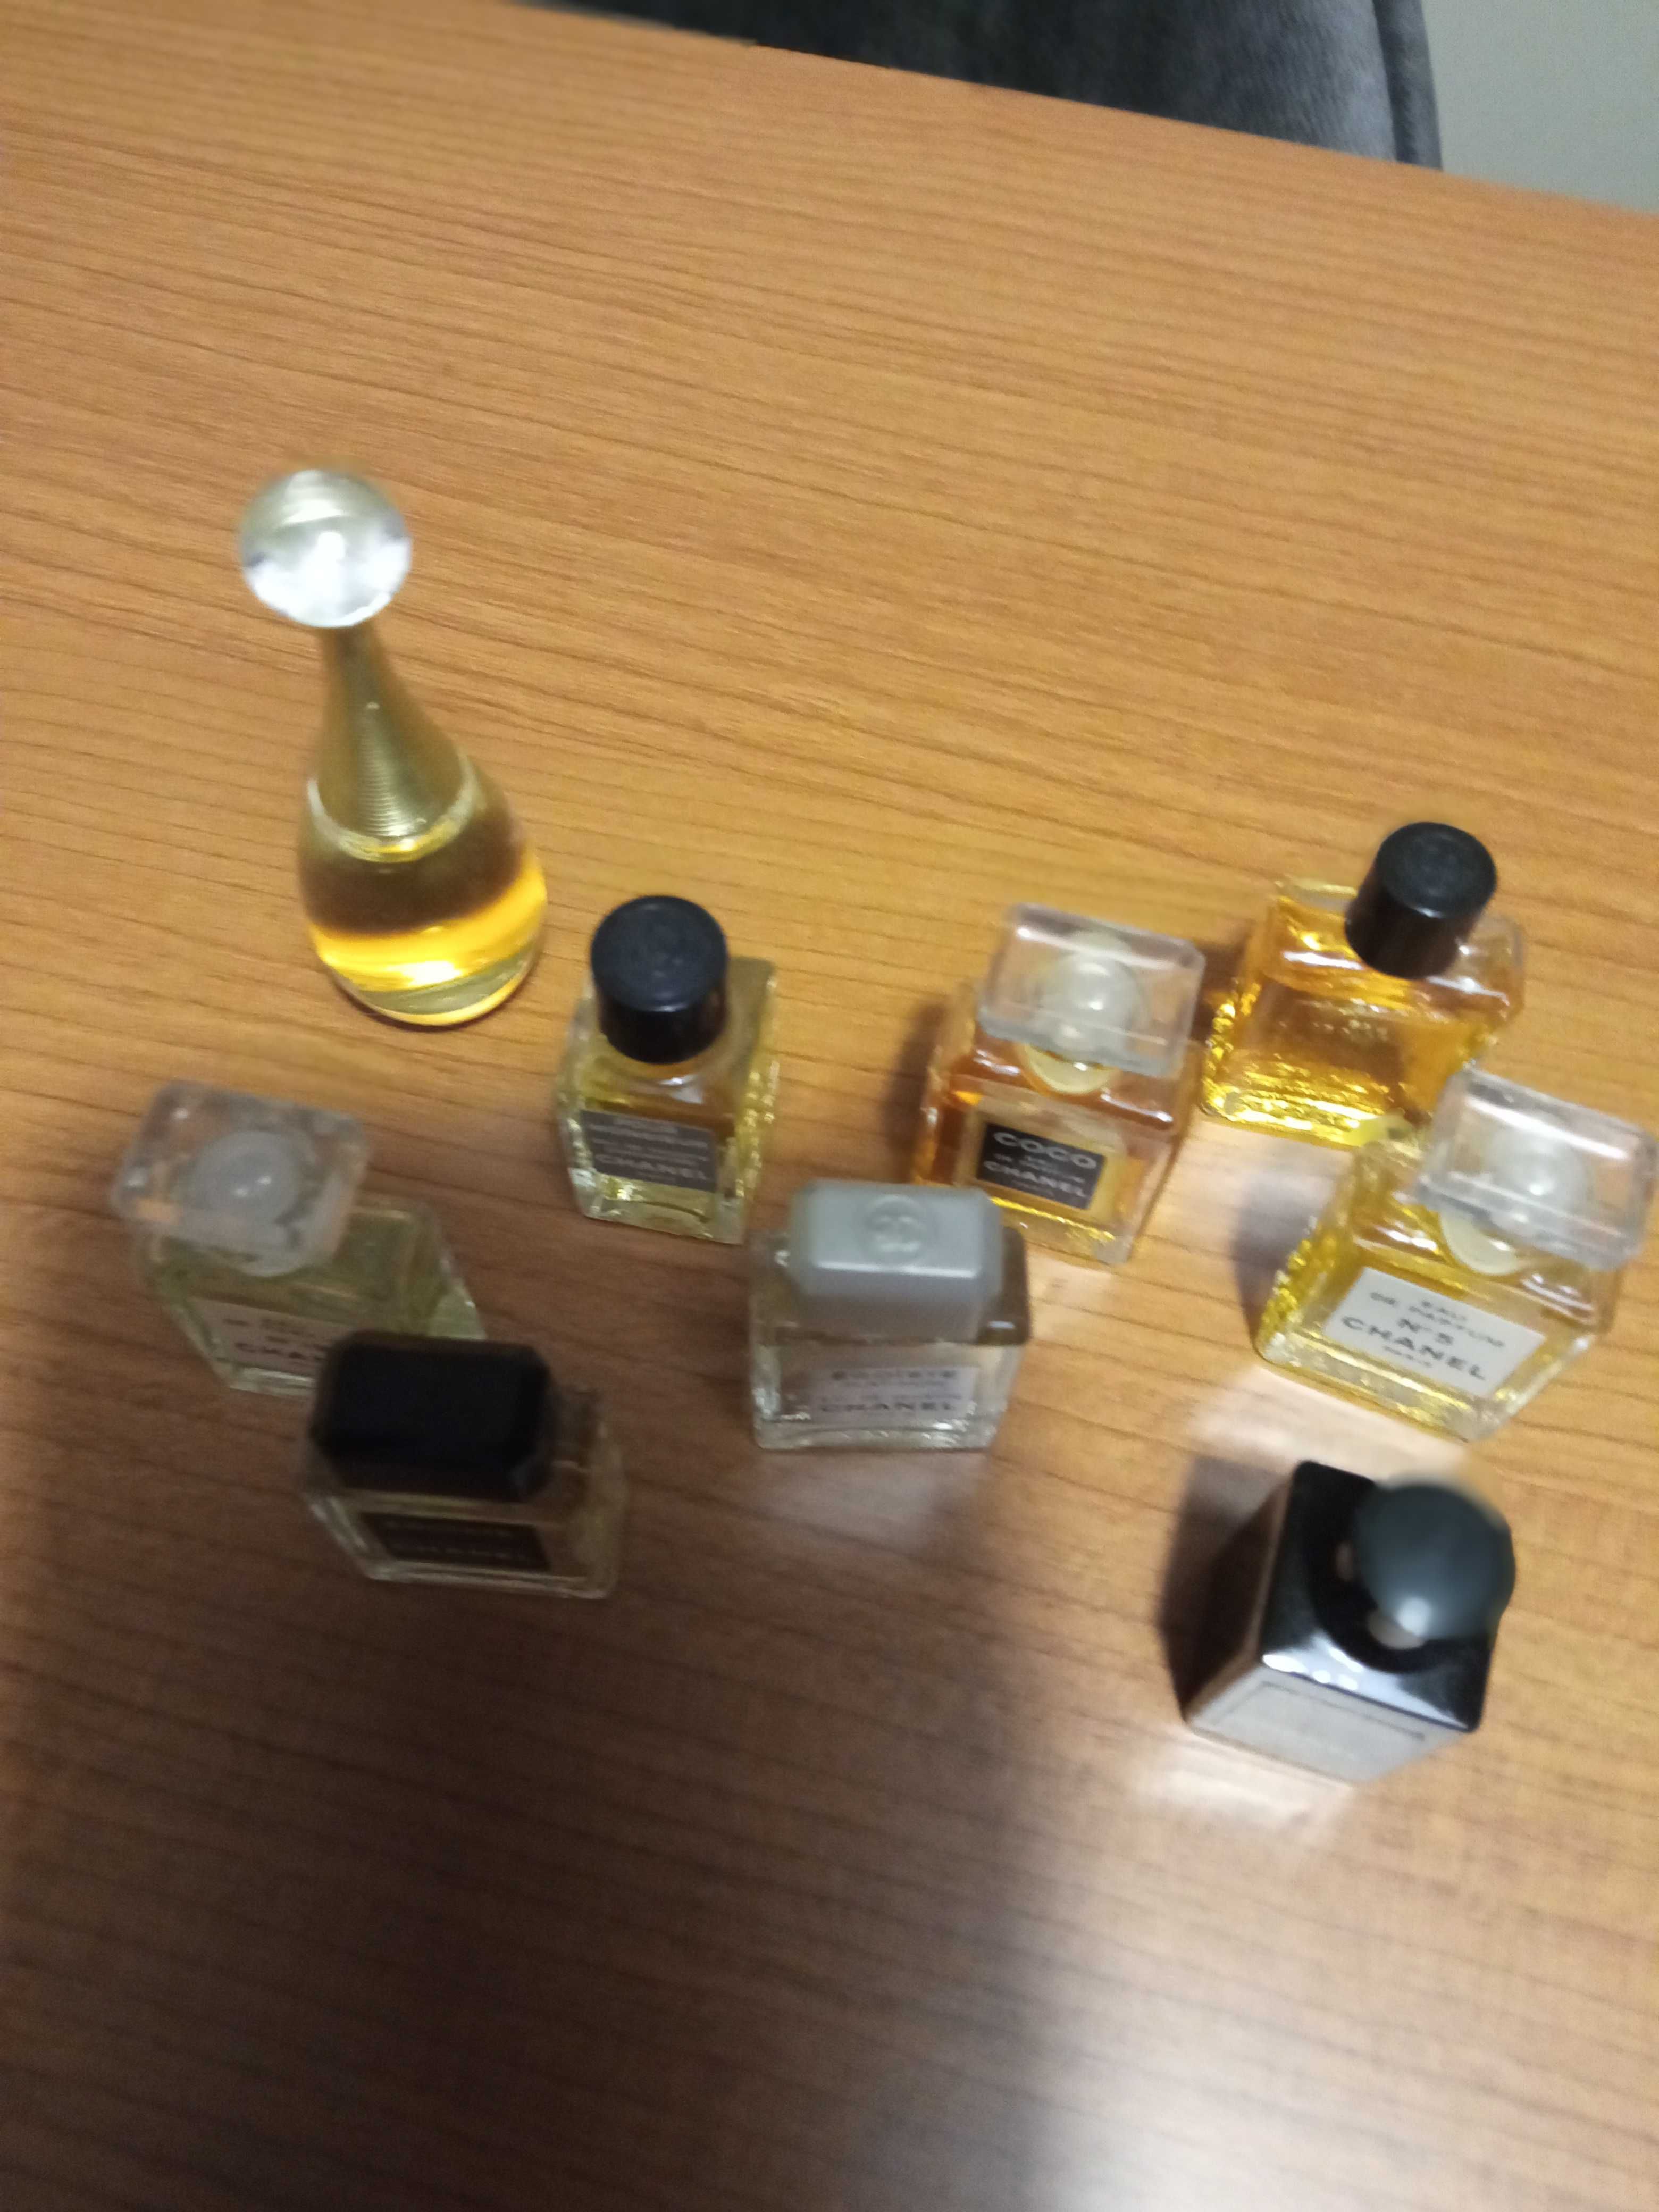 Miniaturas de perfumes